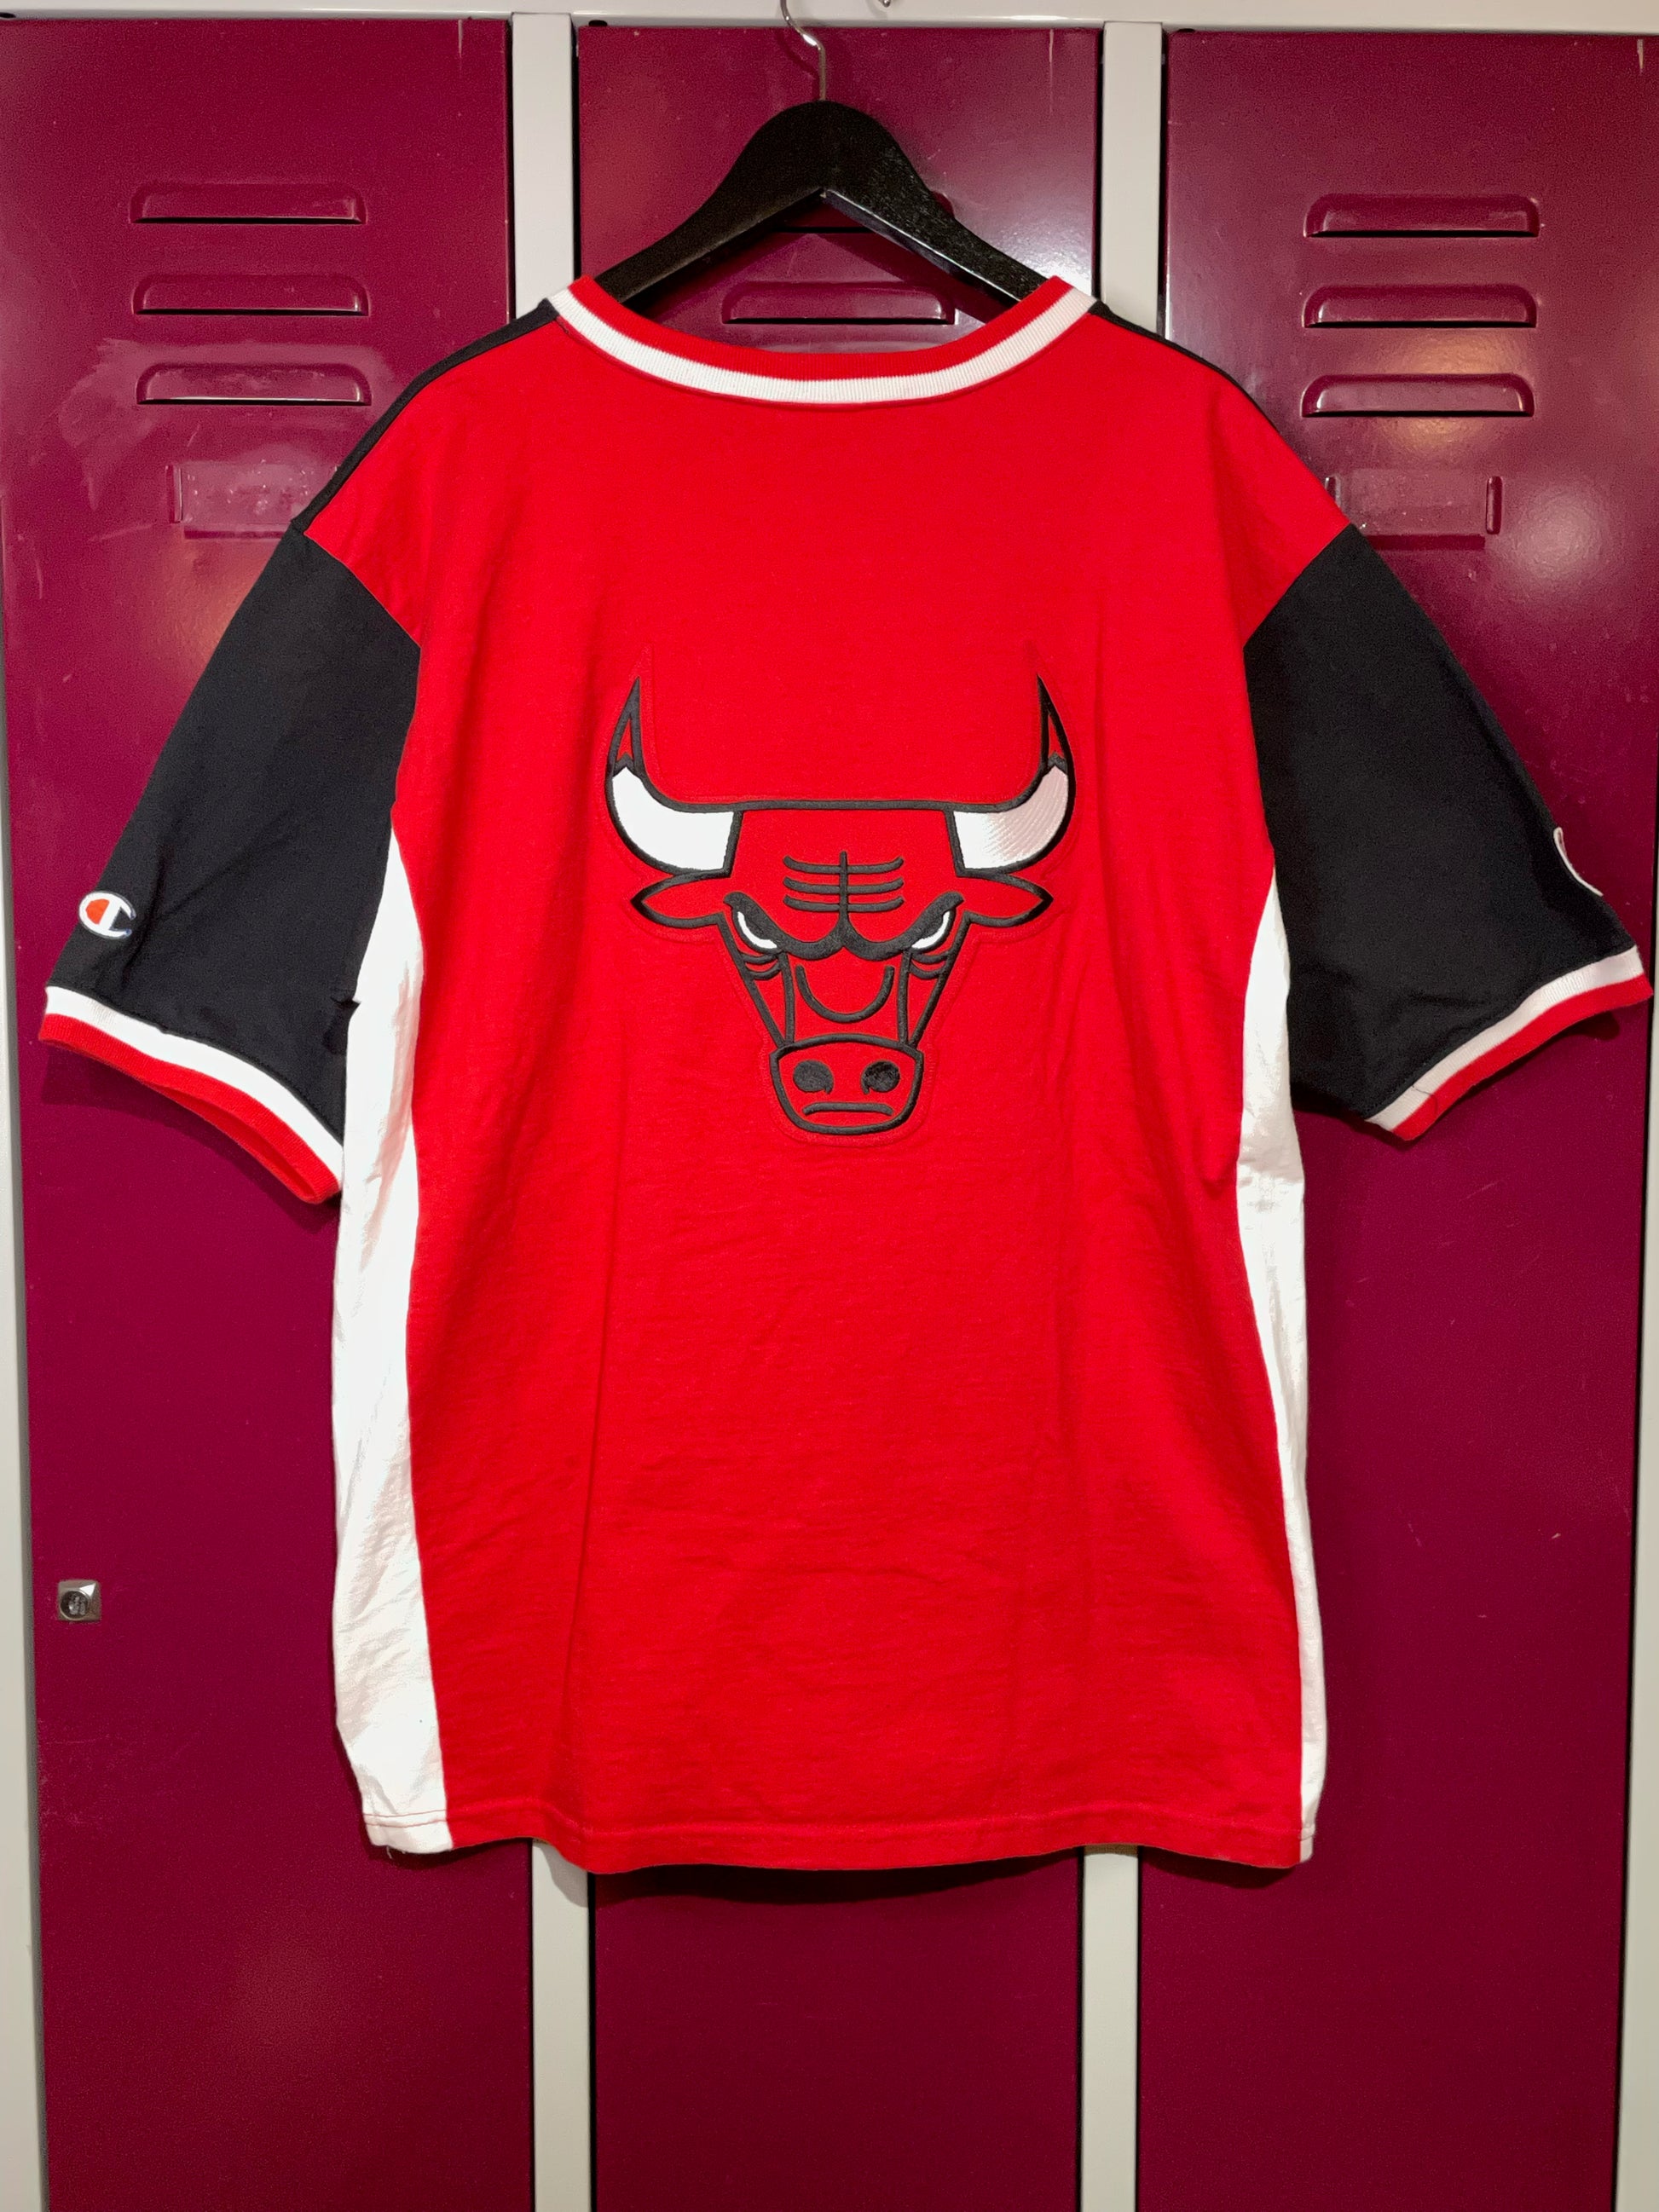 Vintage NBA Chicago Bulls Warm Up Jacket